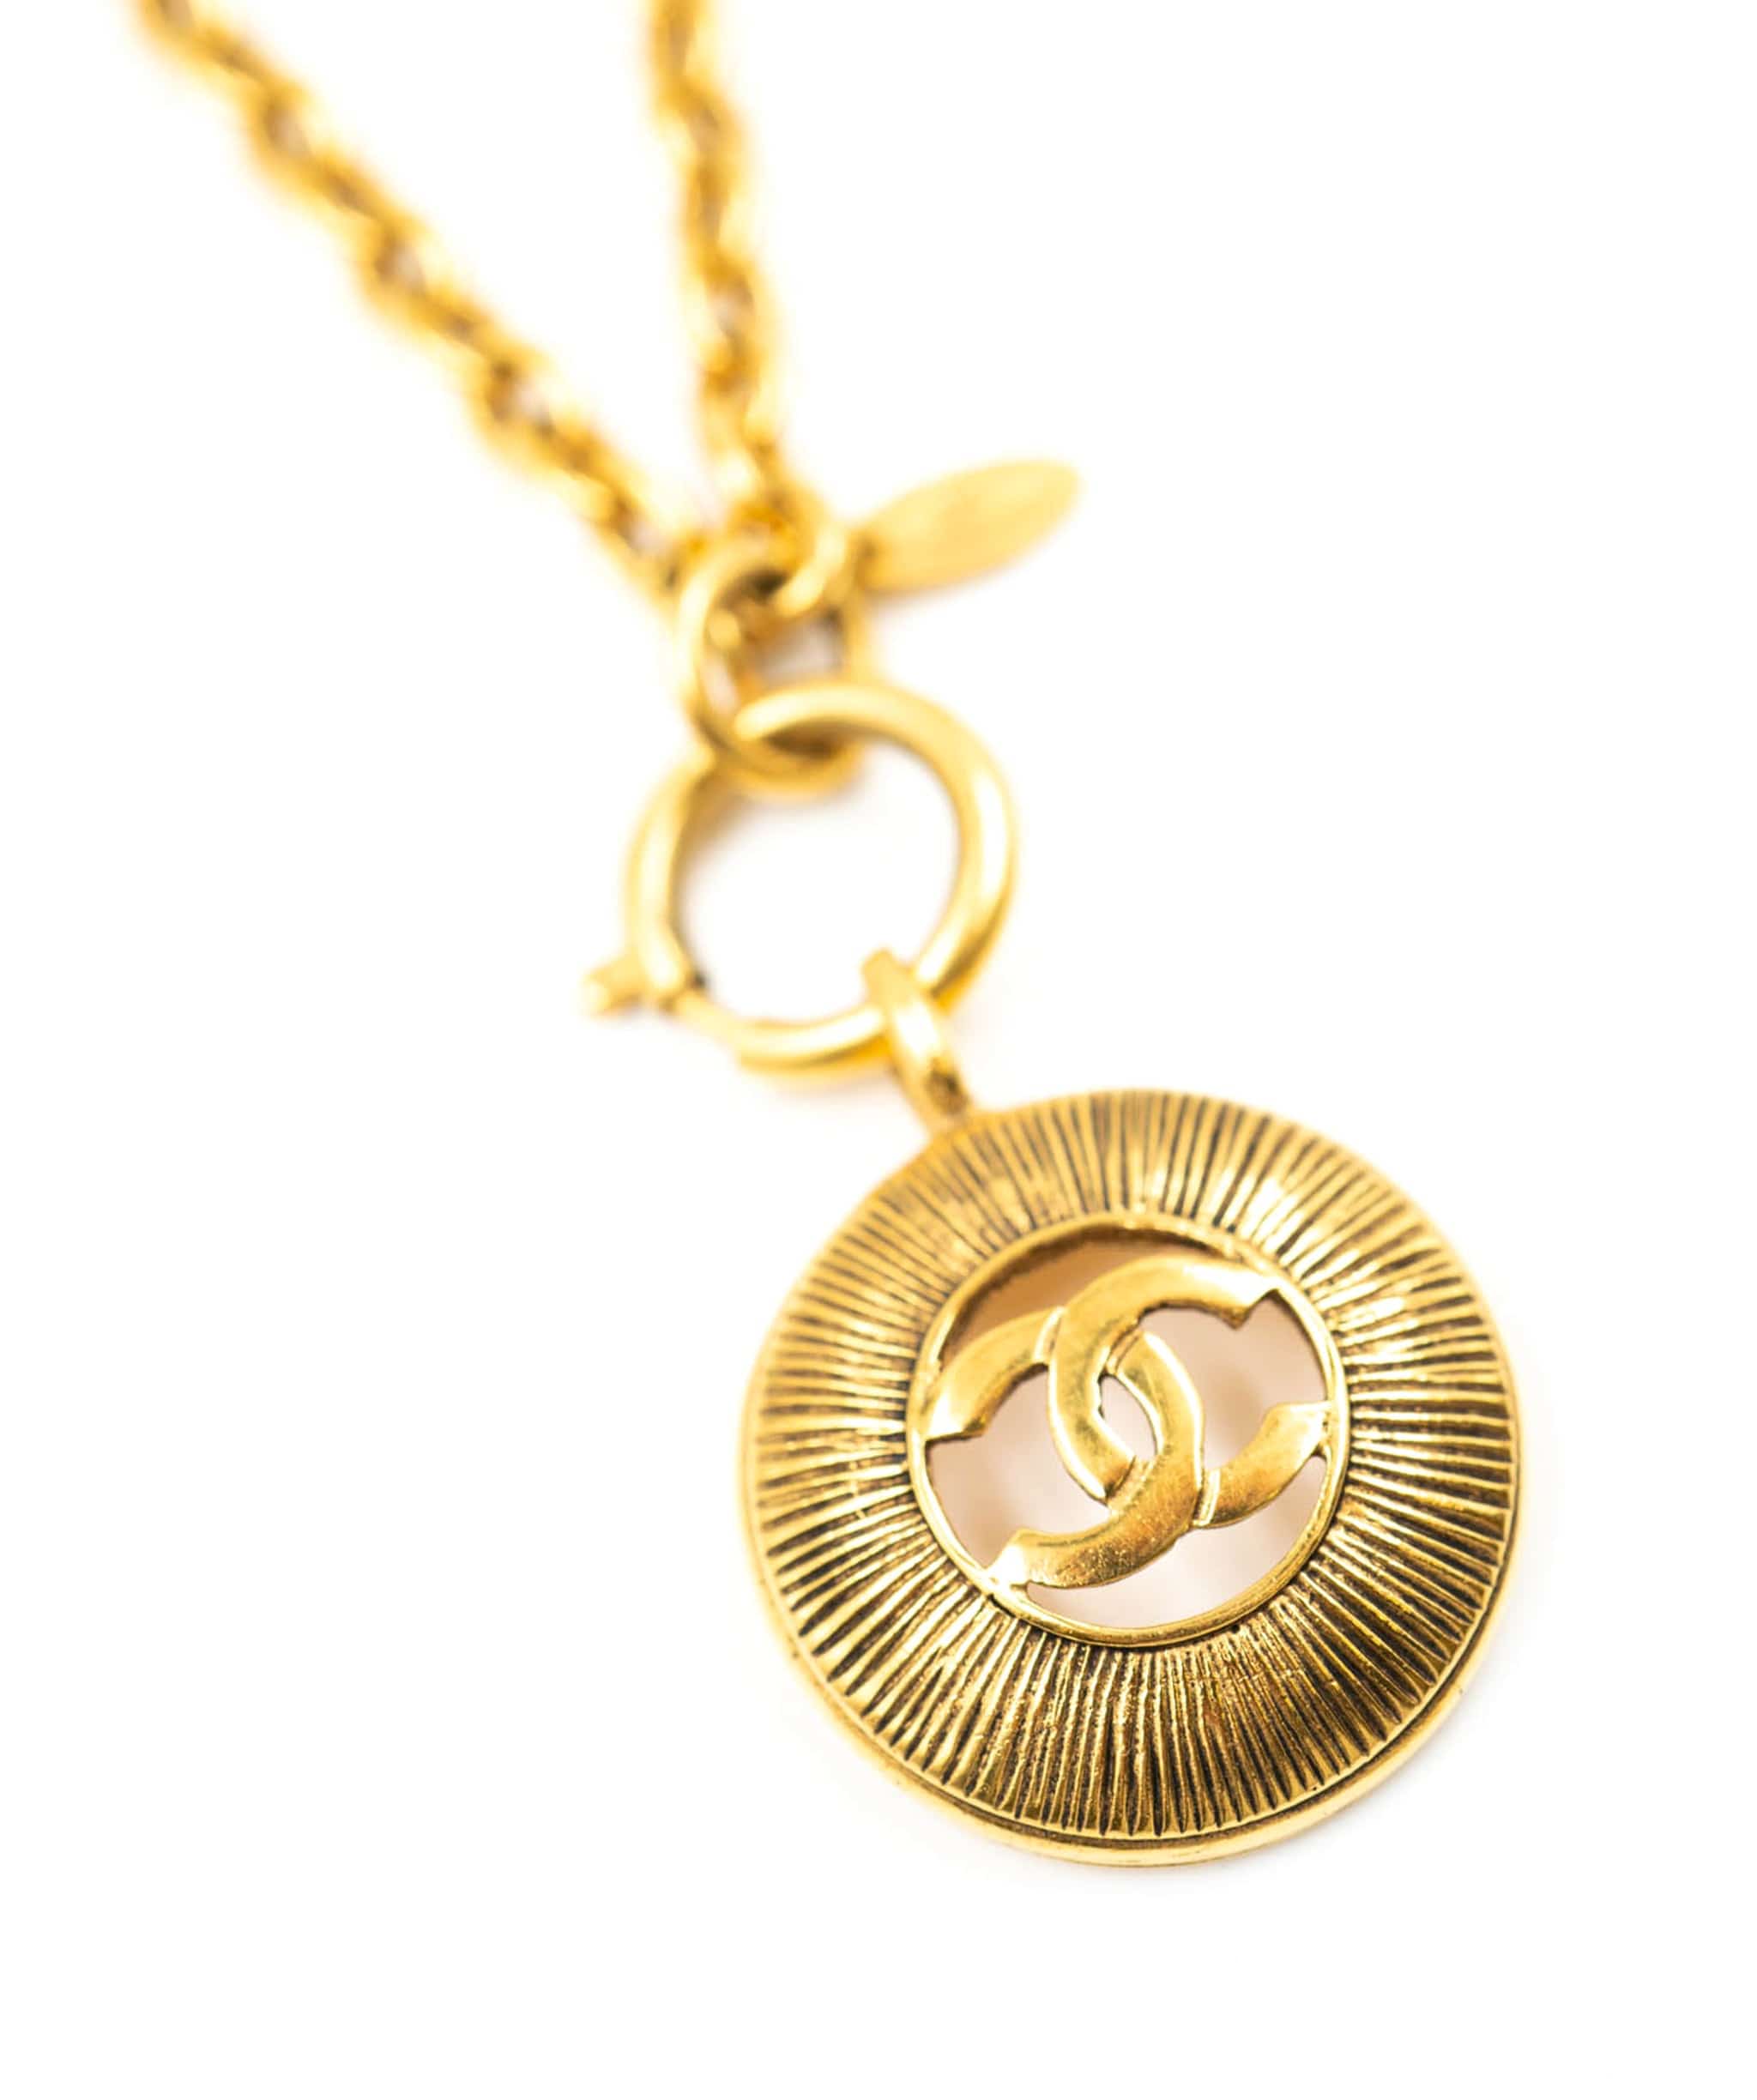 Chanel chanel sunburst necklace ALL0128